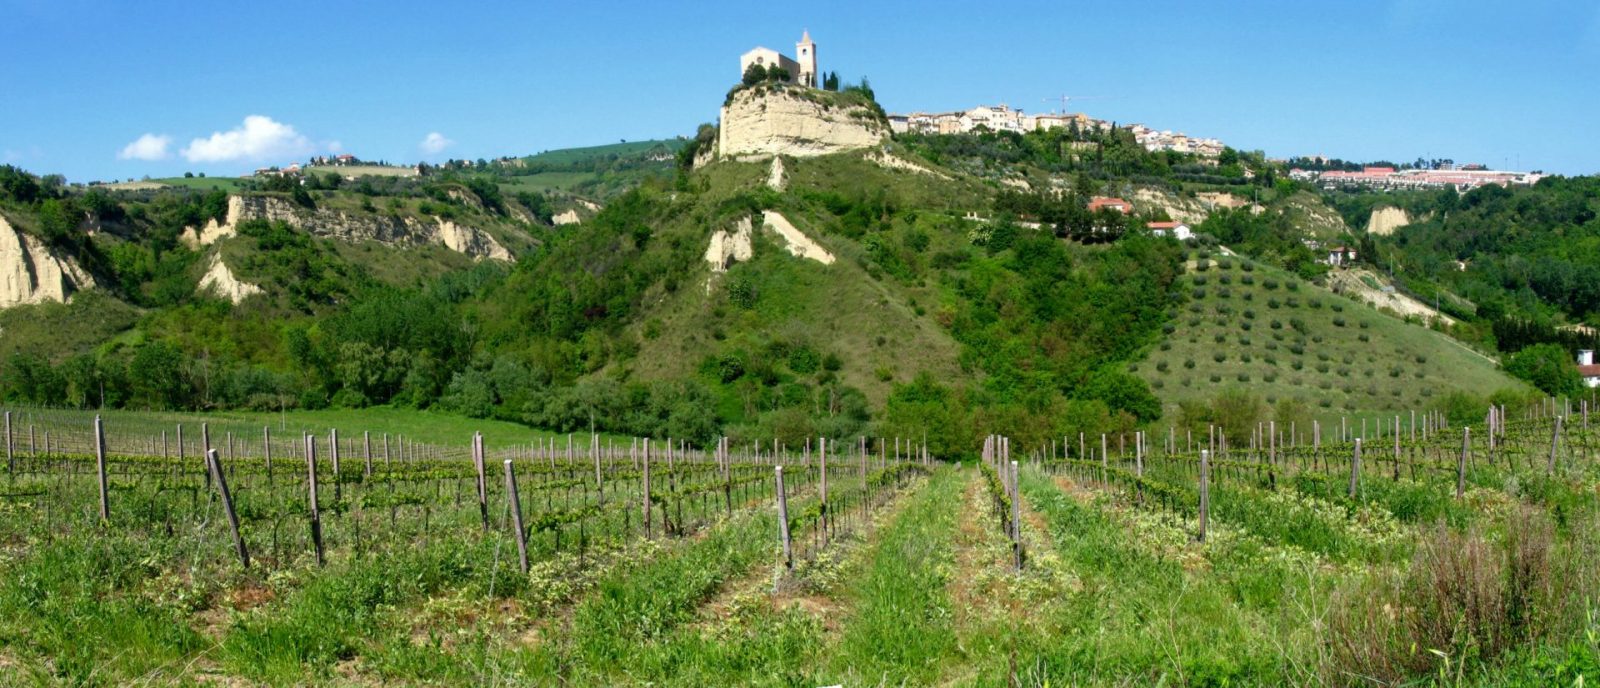 alt=" Offida Le Marche landscape and vineyards"